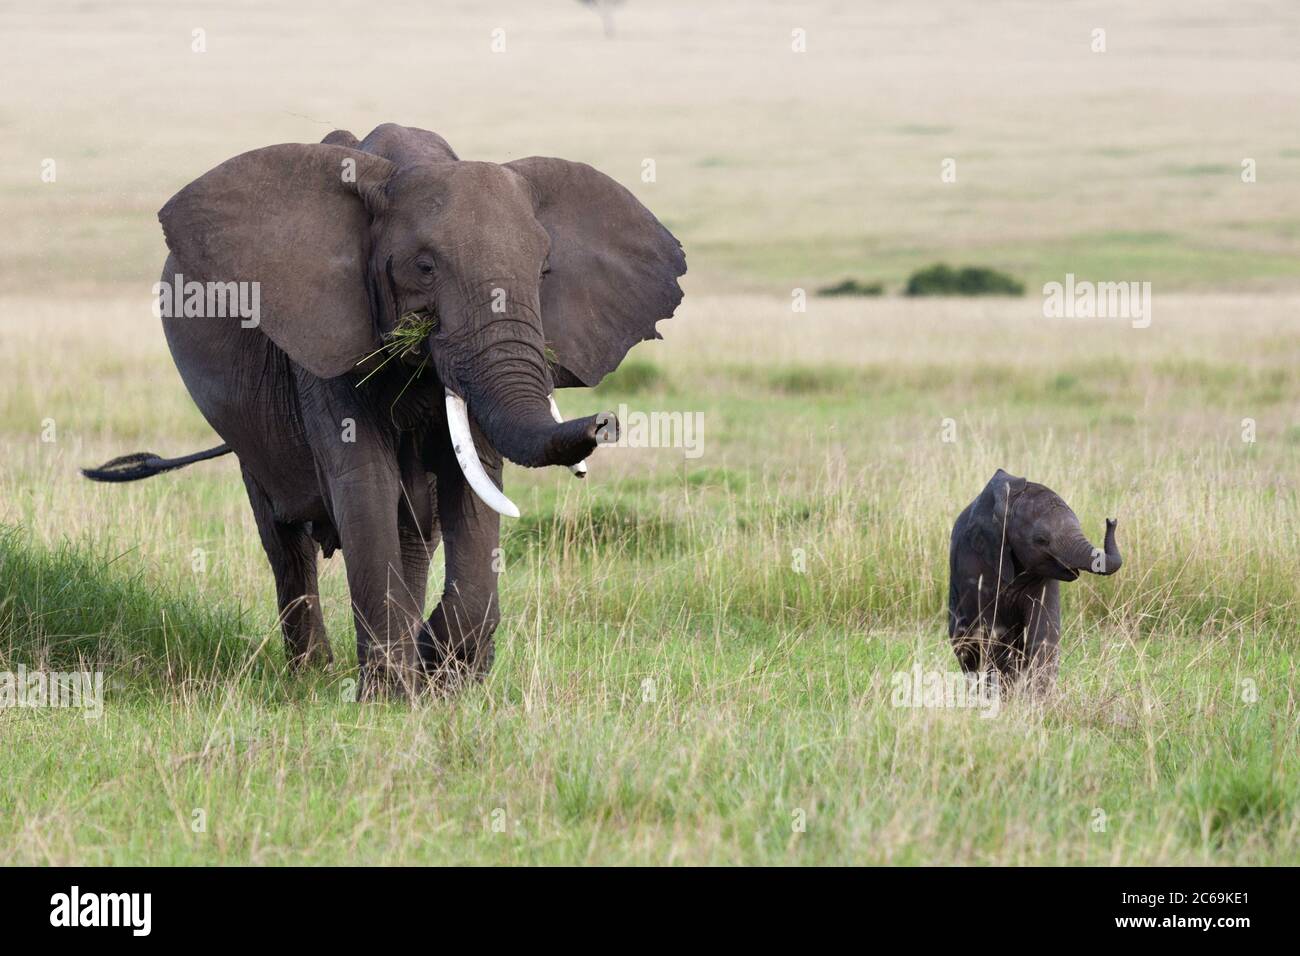 African elephant (Loxodonta africana), cow elephant walking on grass with baby elephant, front view, Kenya, Masai Mara National Park Stock Photo